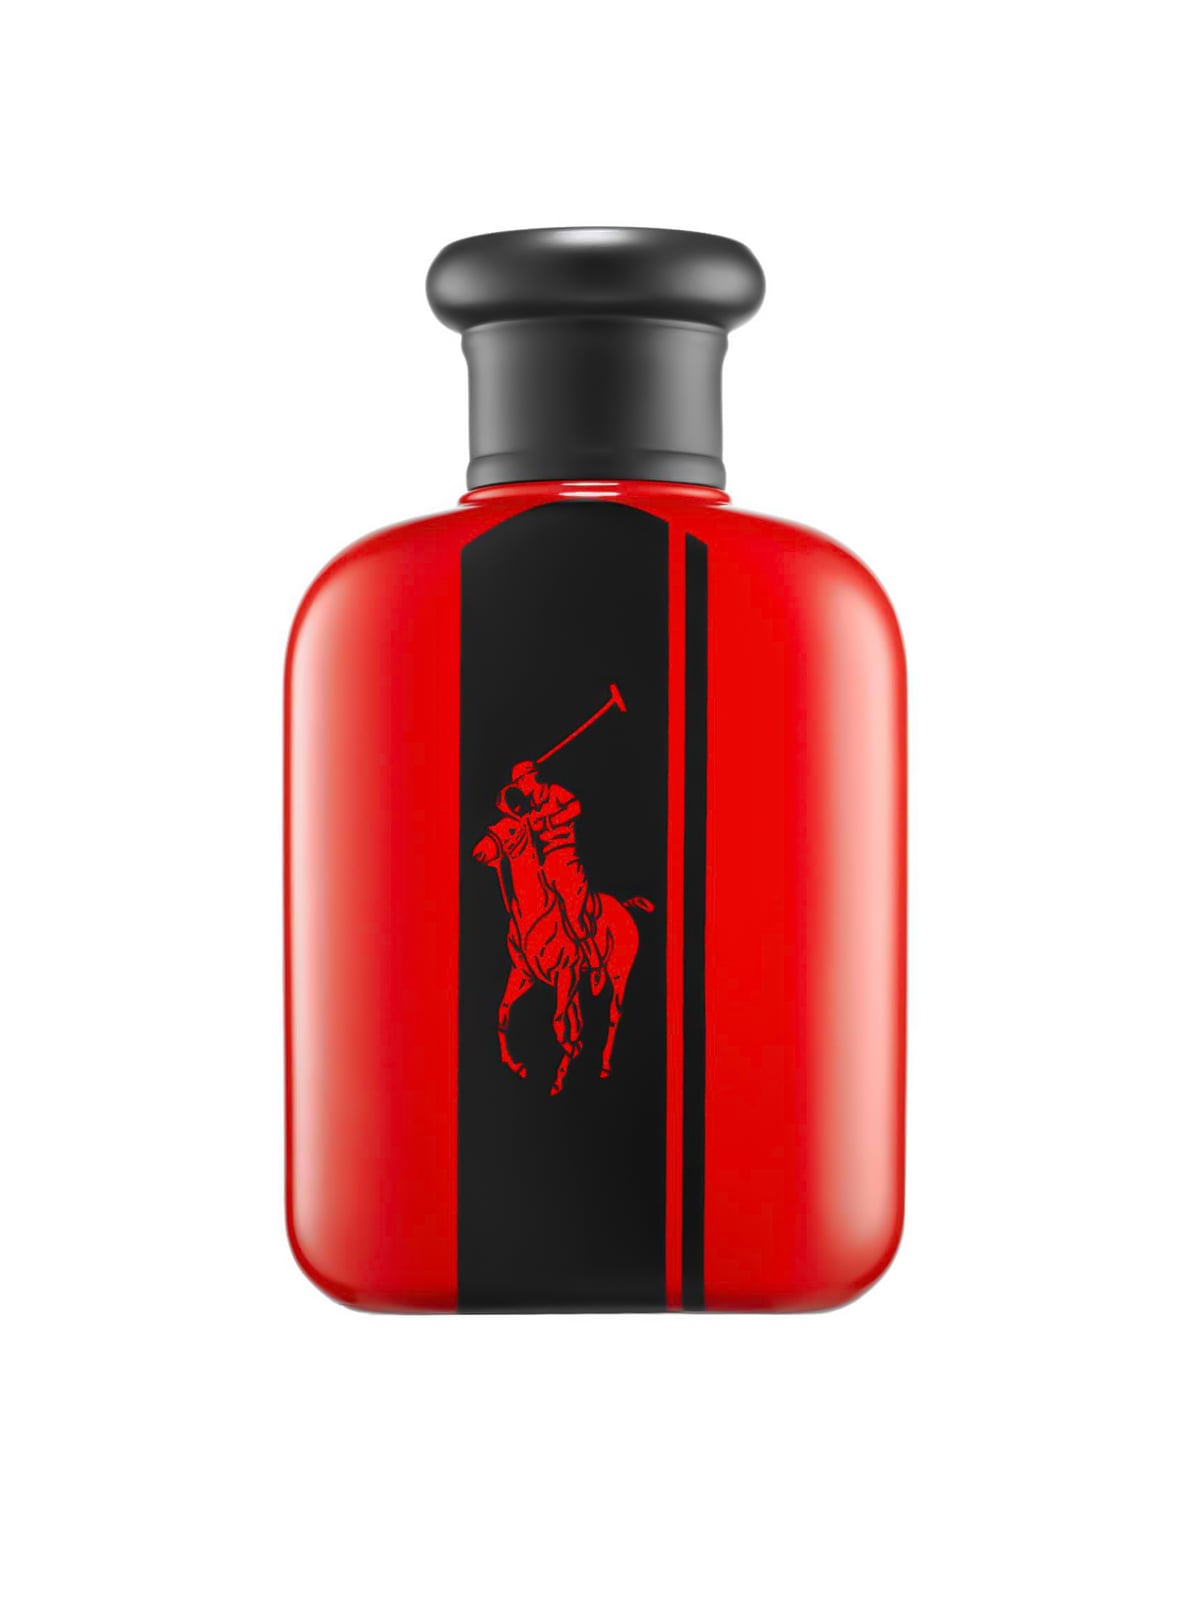 Ralph Lauren Polo Red EDP Intense Perfume for Men by Ralph Lauren Polo